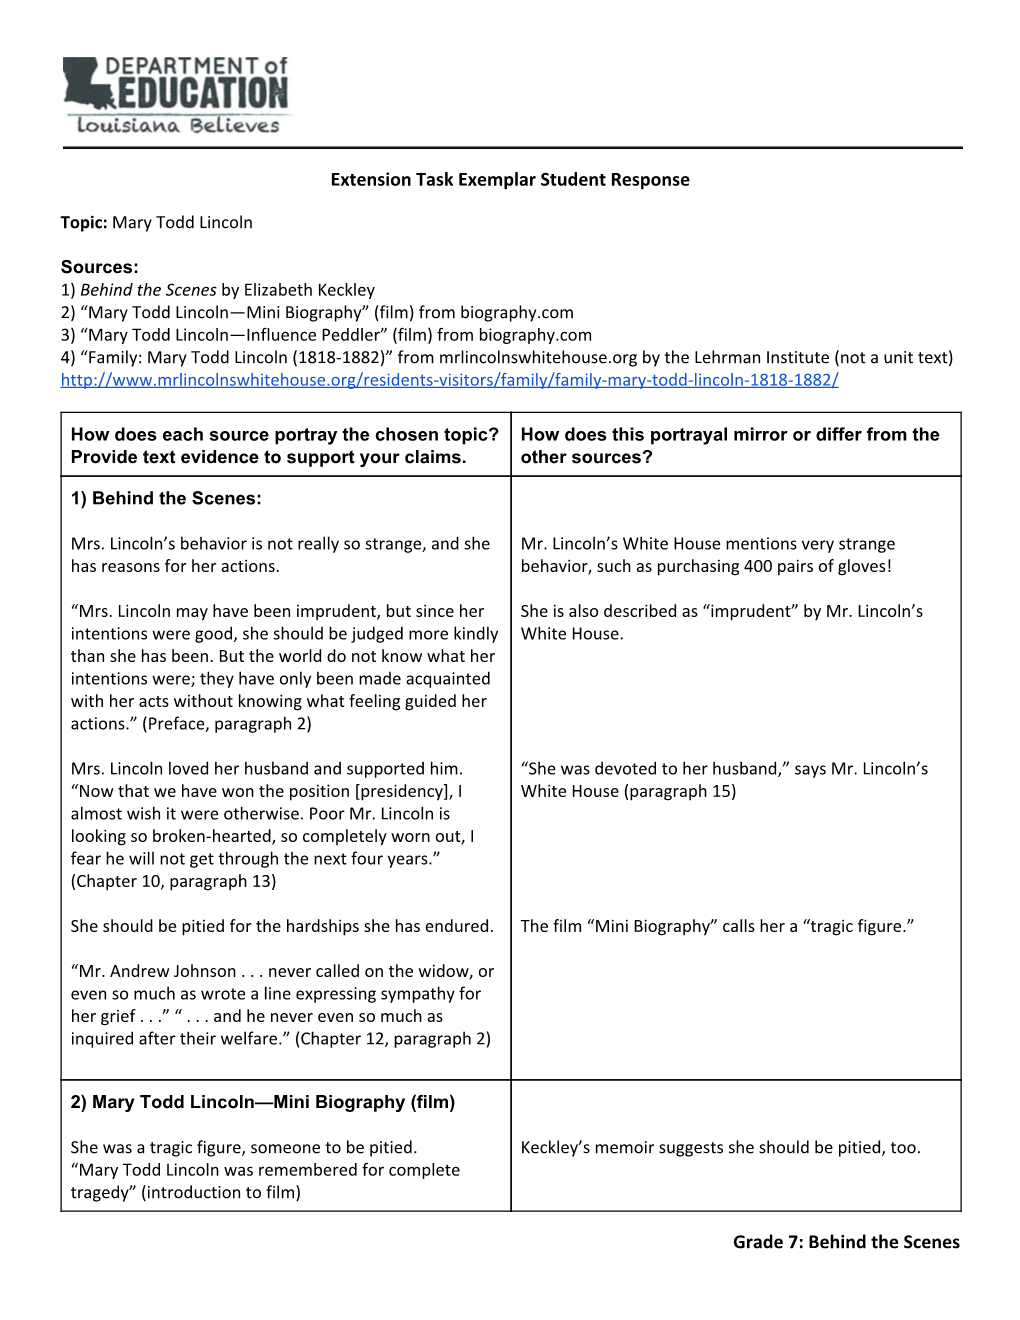 Extension Task Exemplar Student Response Grade 7